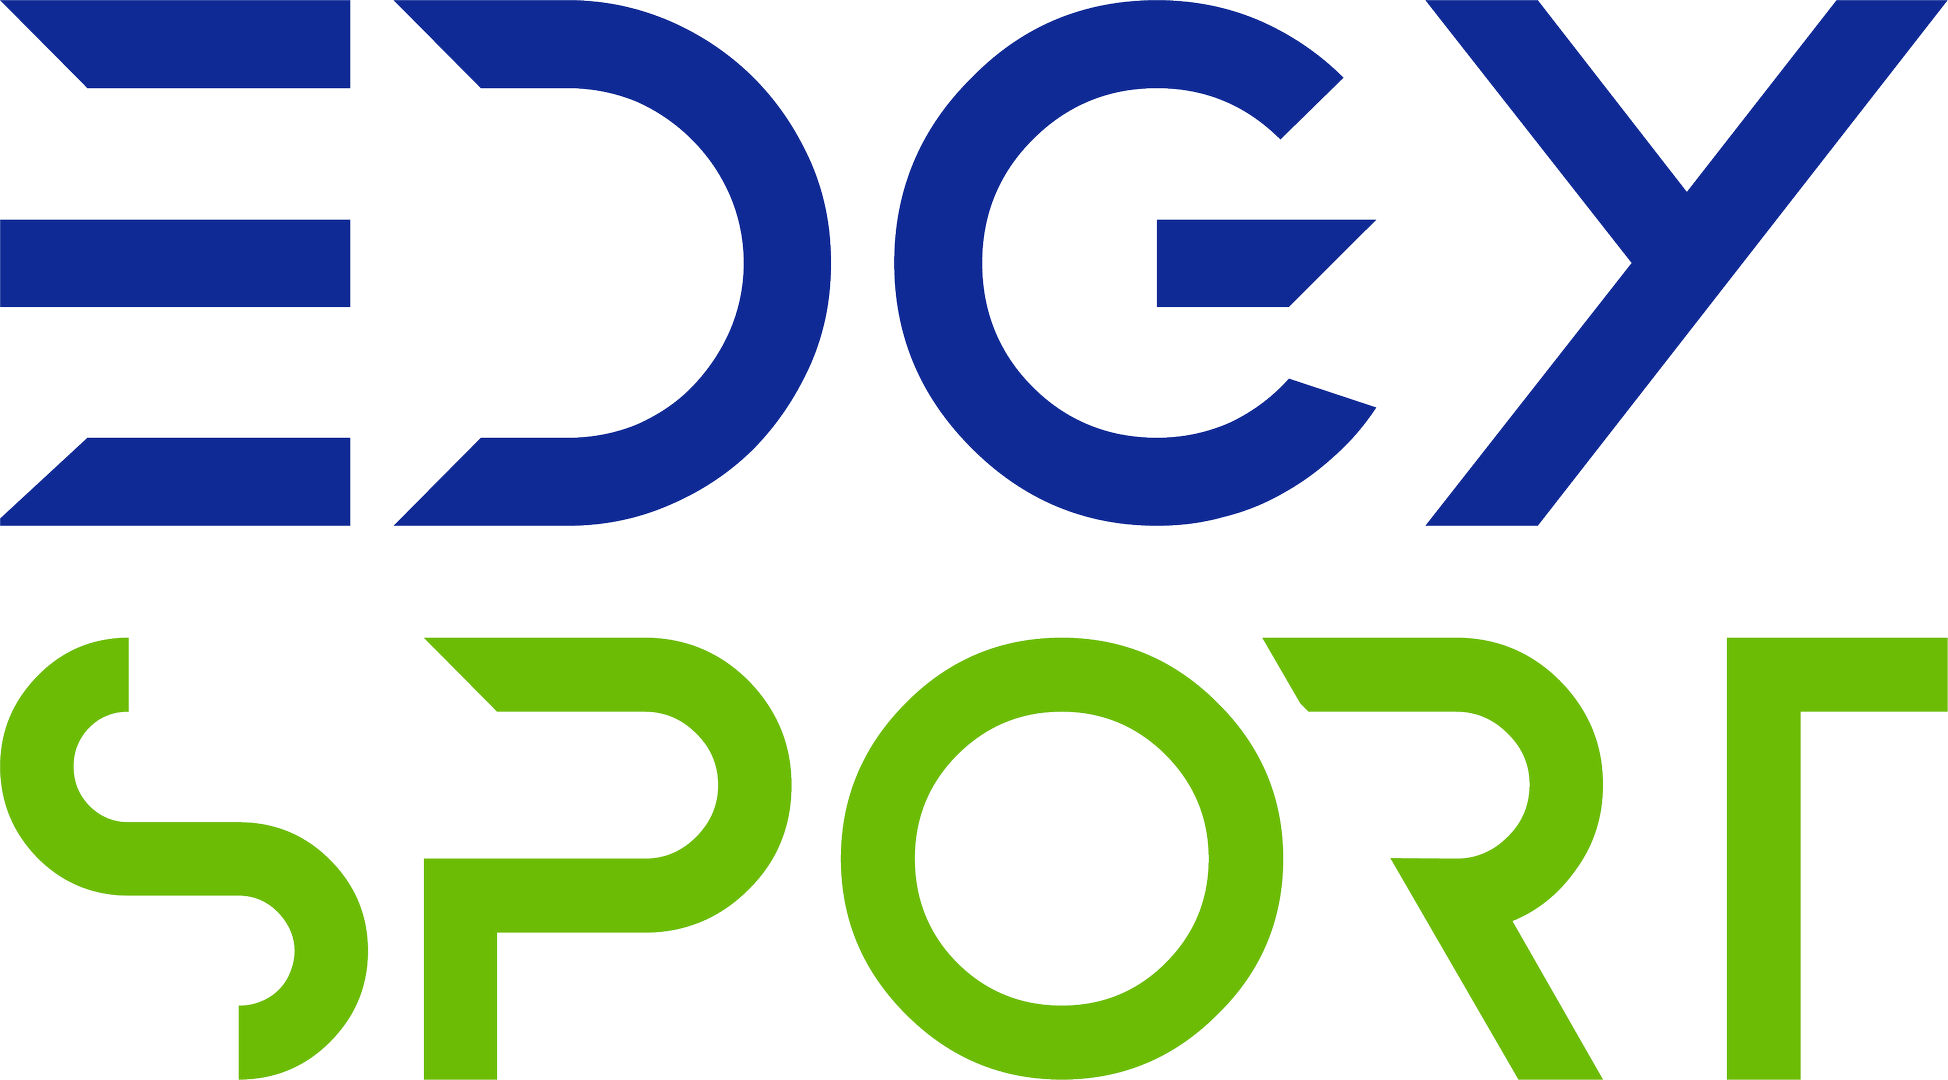 edgy sport site logo